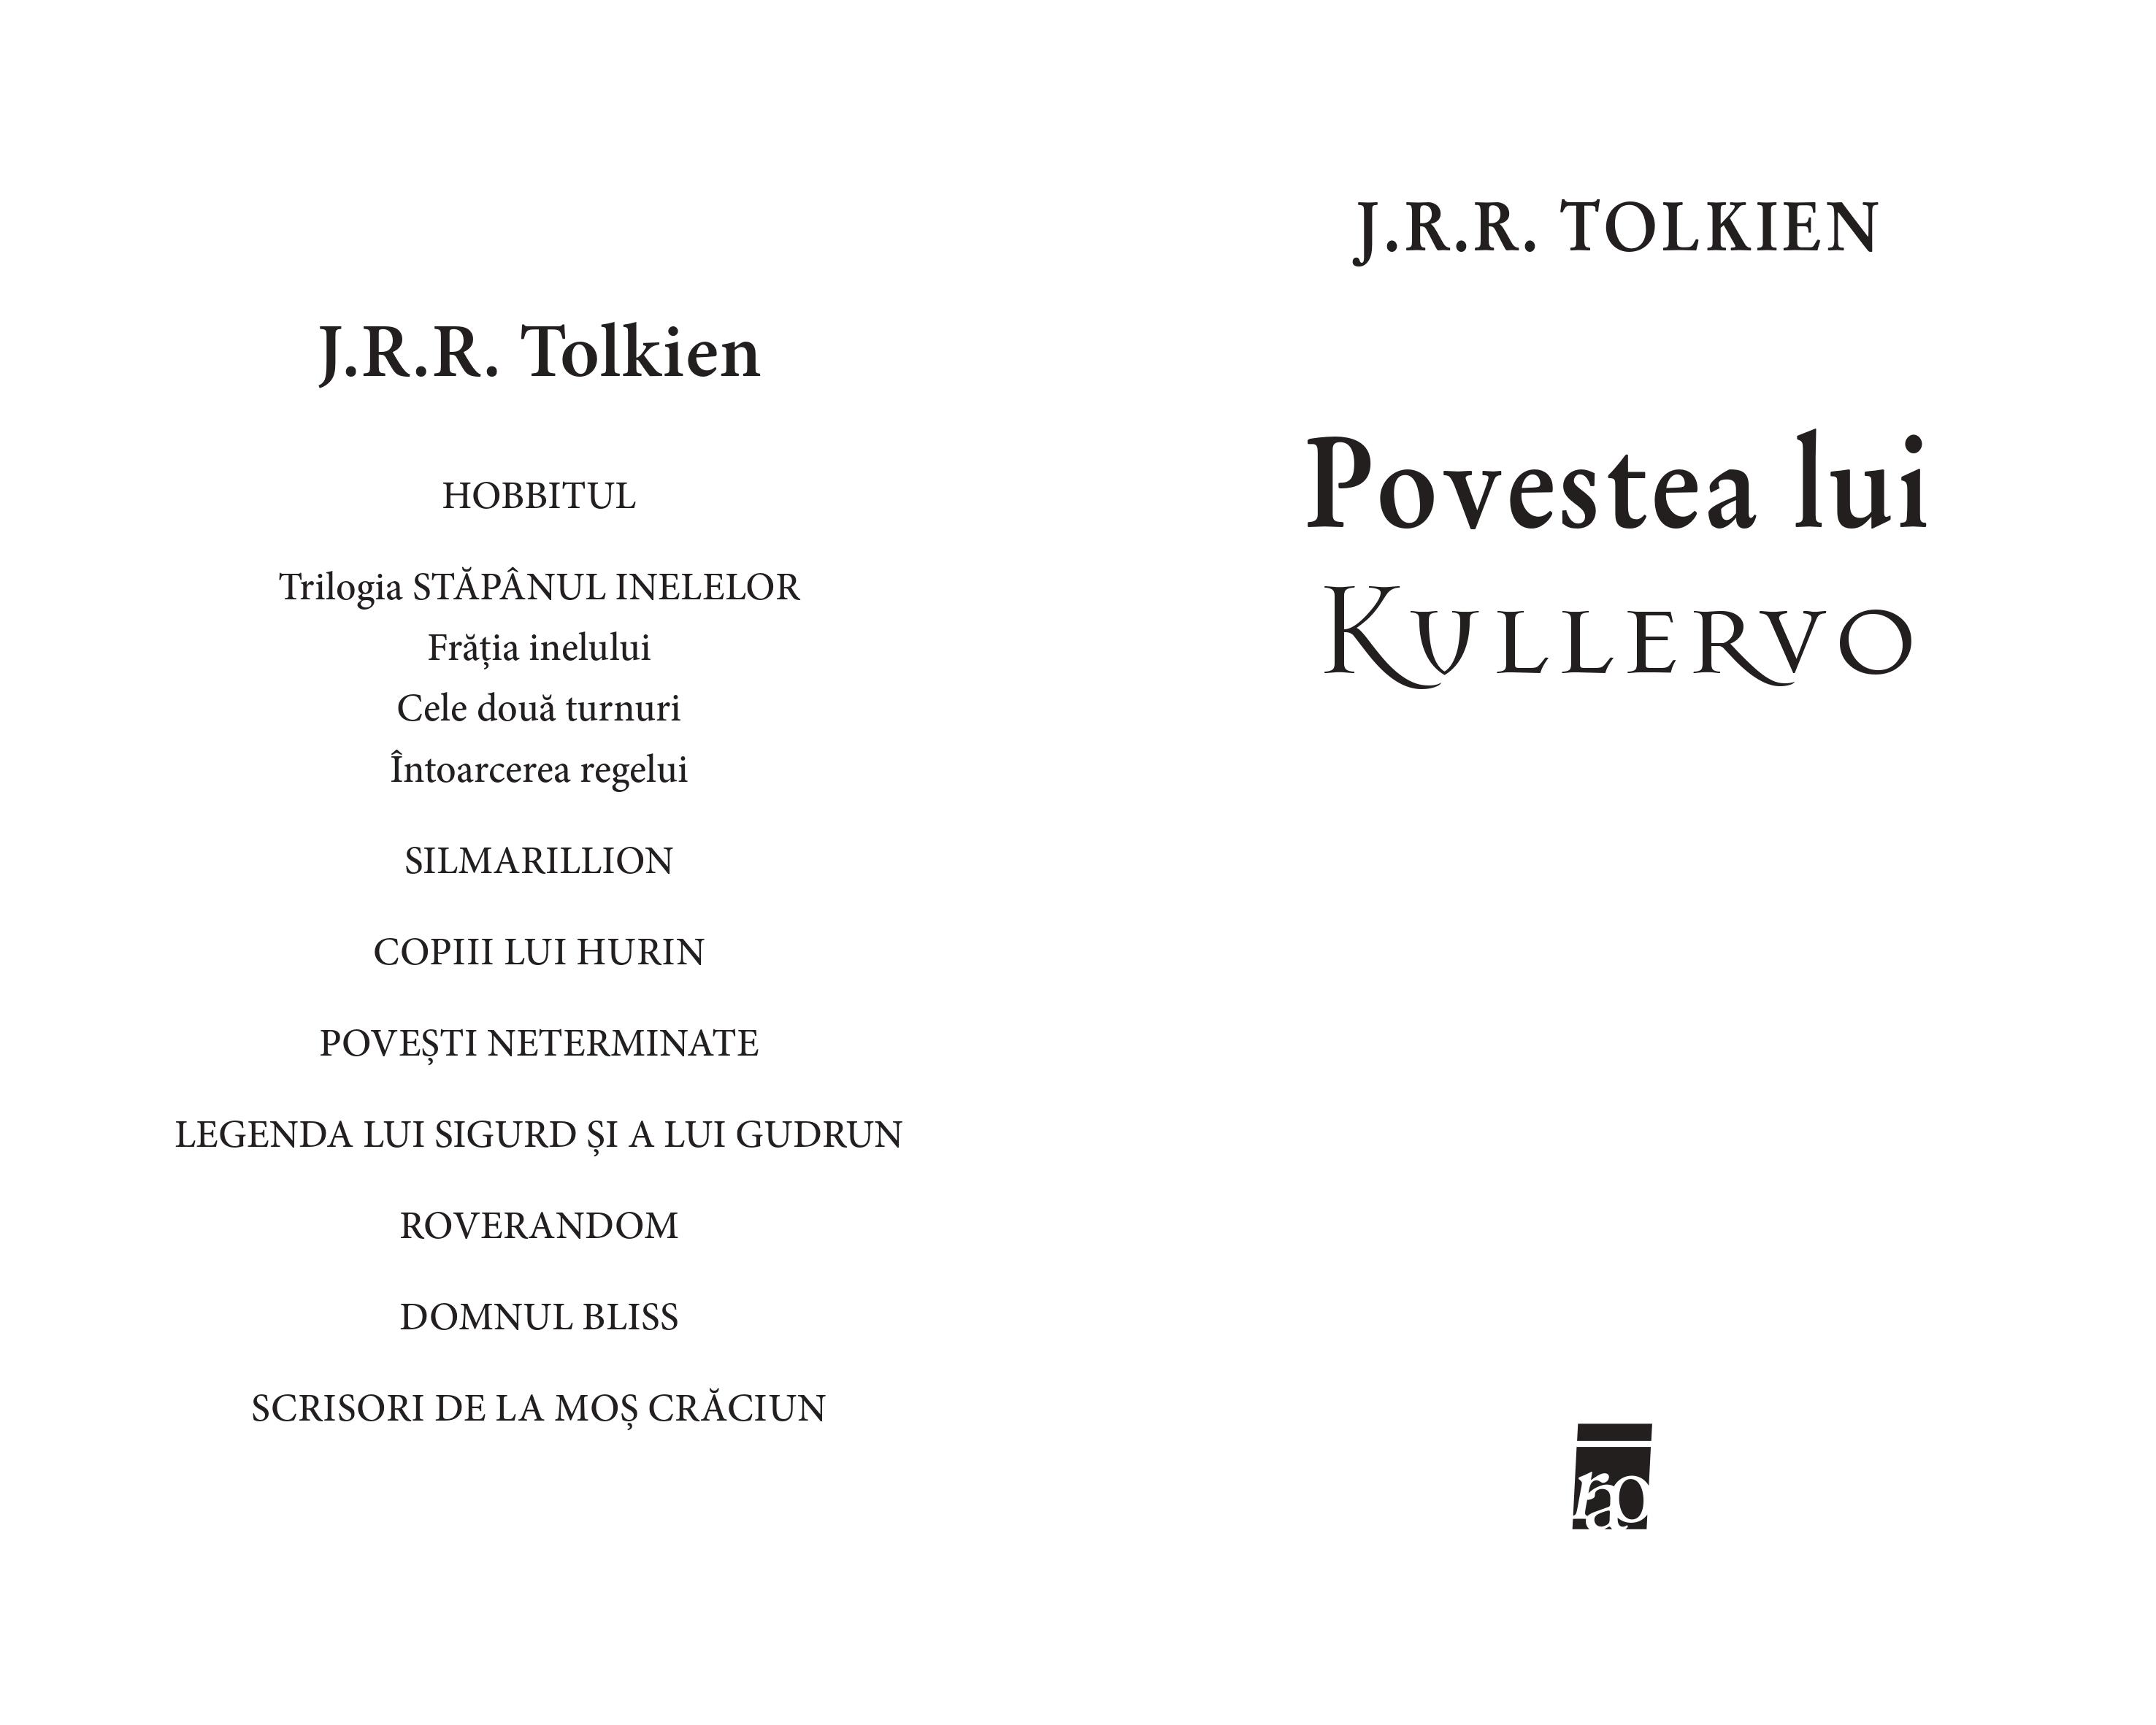 Poze Povestea lui Kullervo | J.R.R. Tolkien